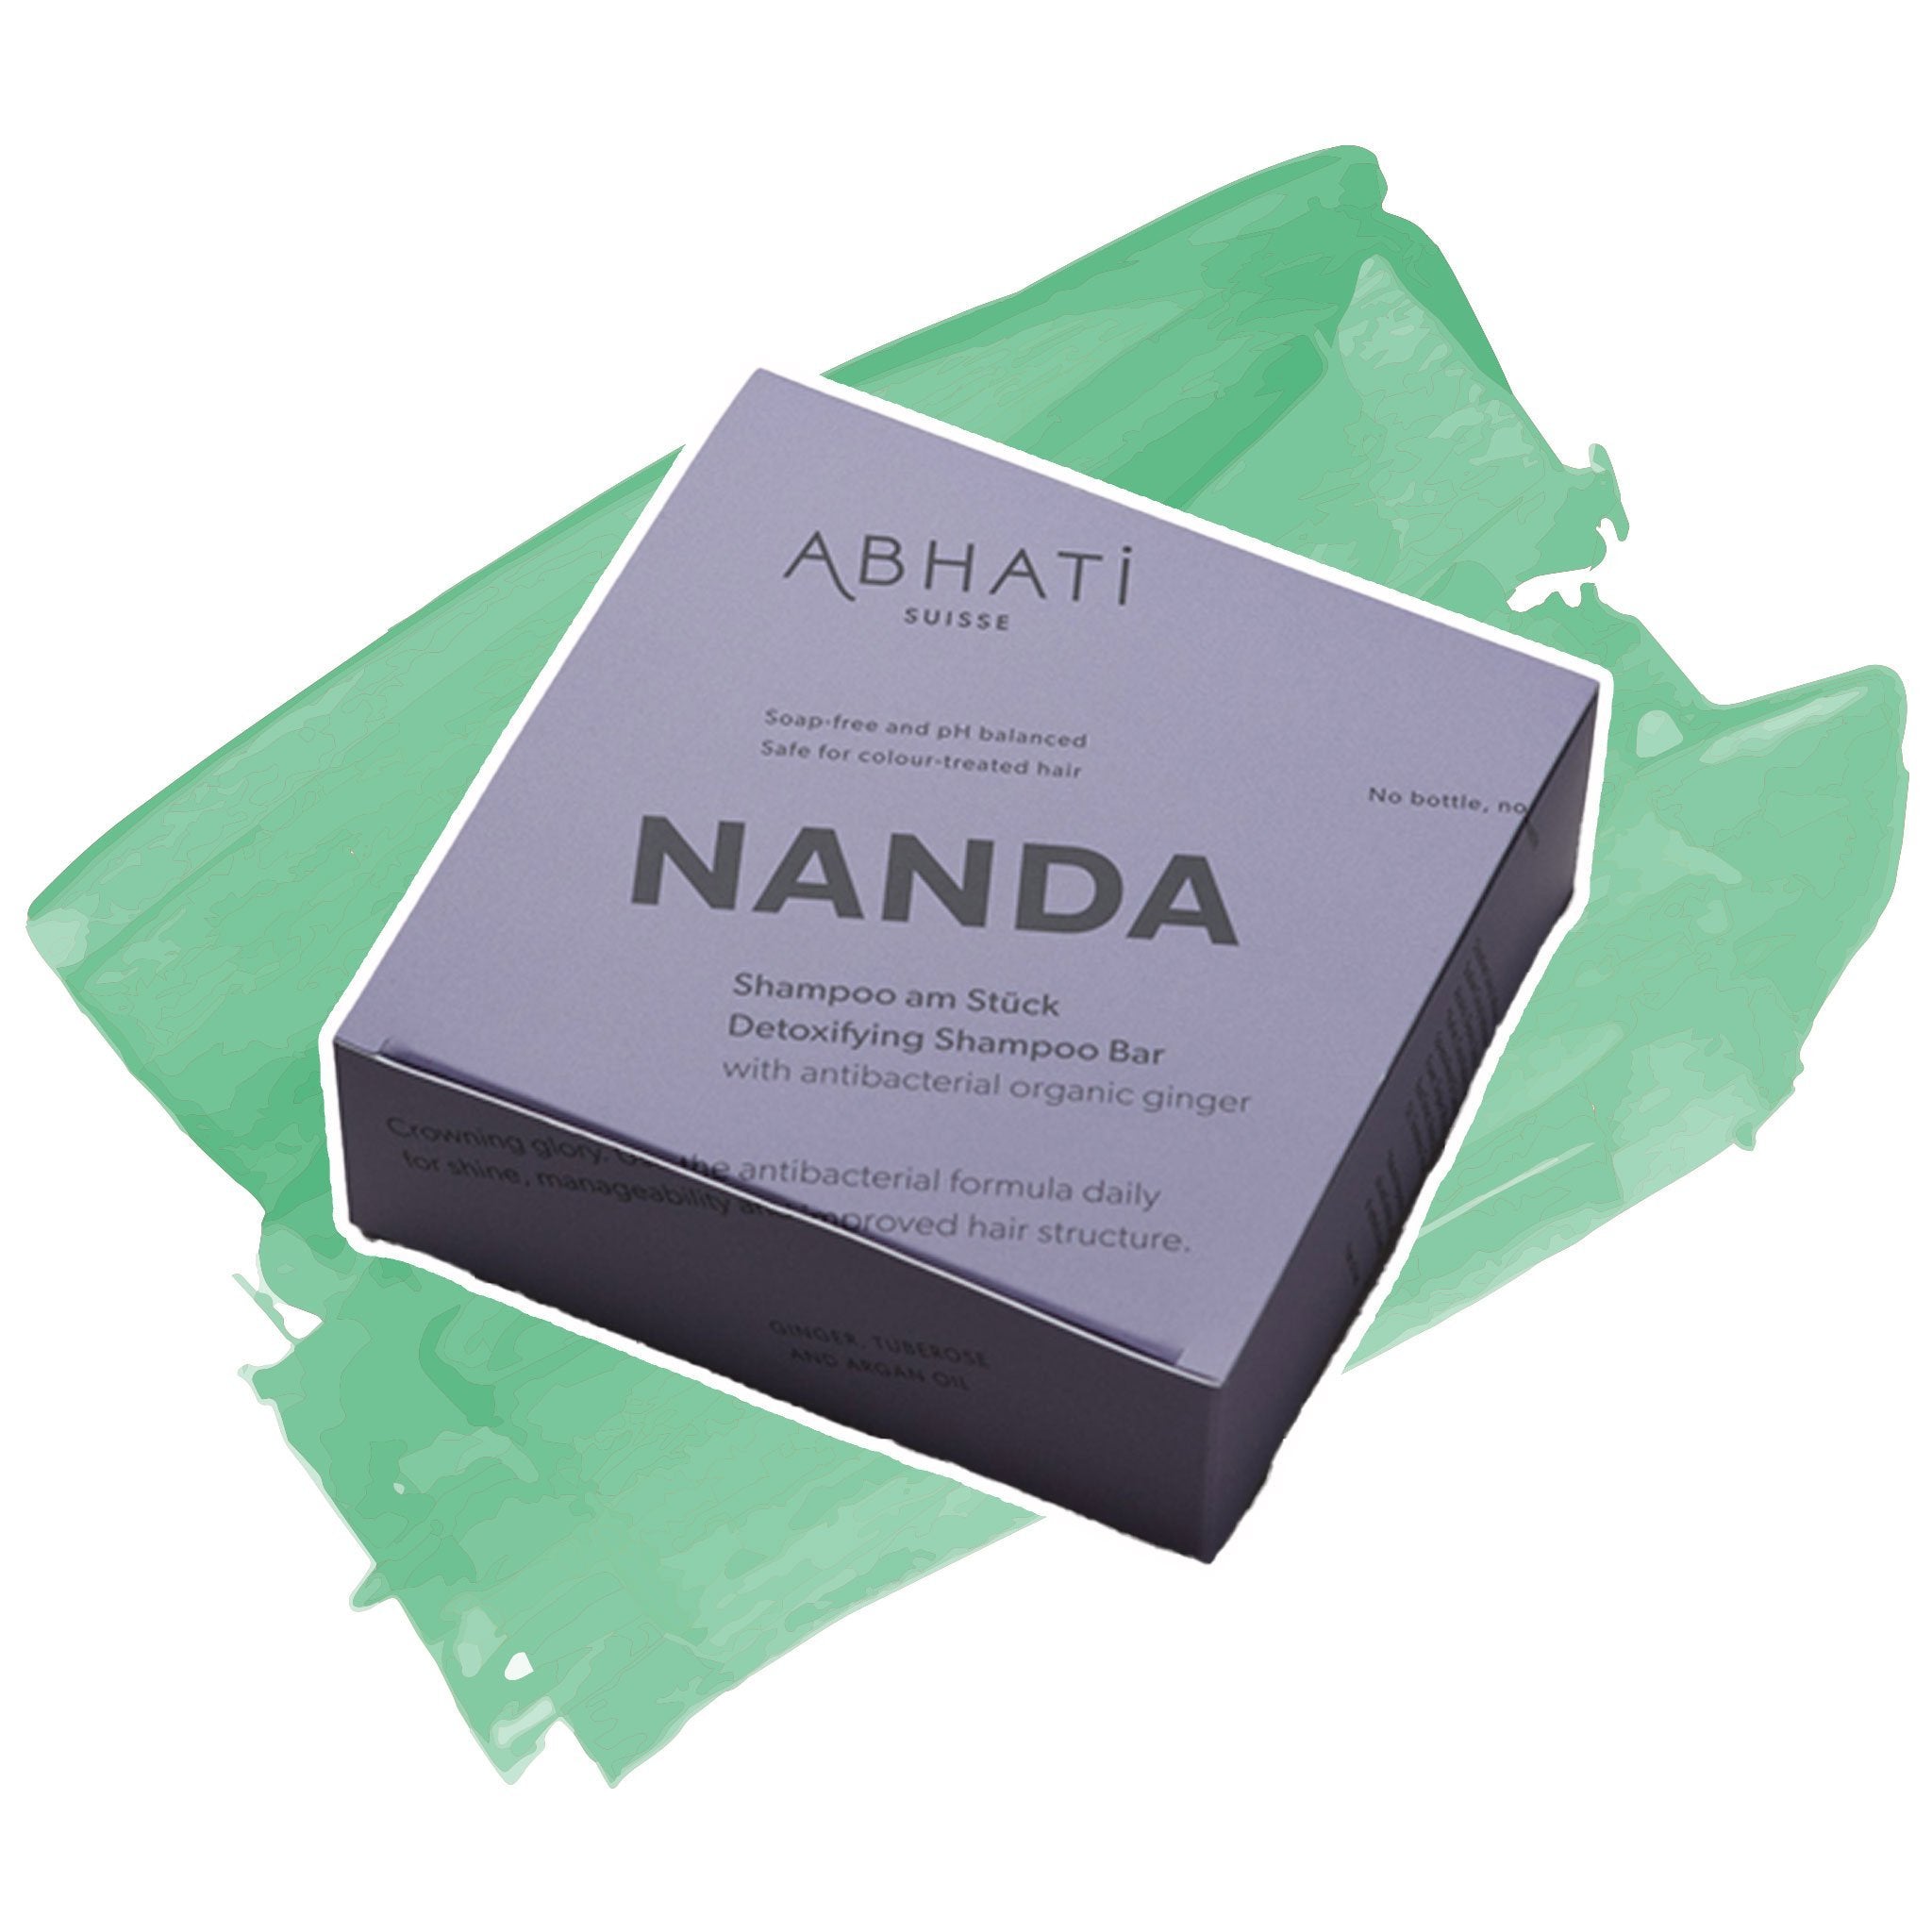 Abhati Suisse | Nanda Detoxifying Shampoo am Stück - lockenkopf